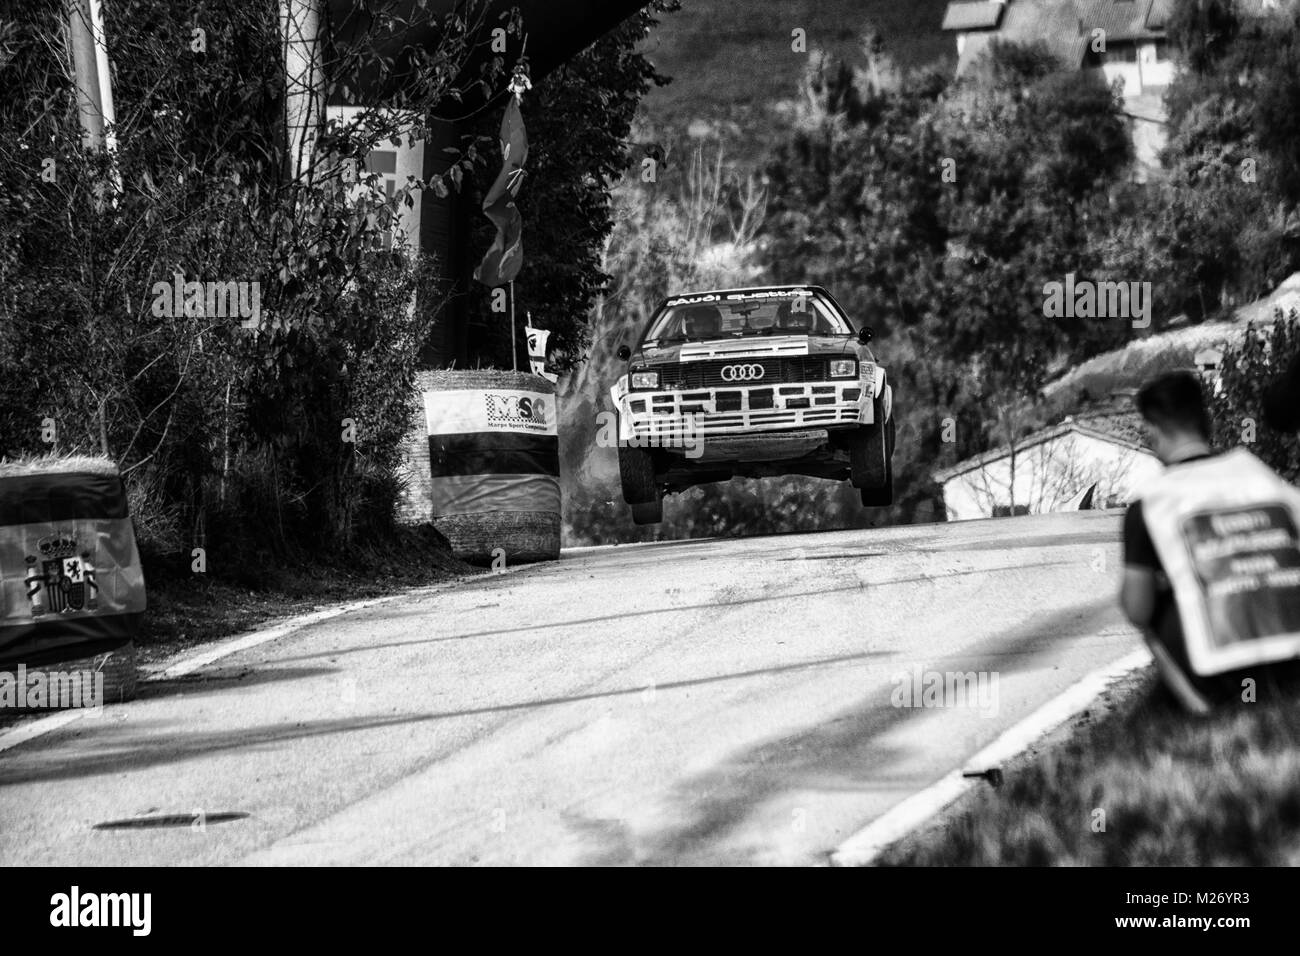 SANMARINO, SANMARINO - OTT 21, 2017 : AUDI QUATTRO 1983 in old racing car rally THE LEGEND 2017 the famous SAN MARINO historical race Stock Photo